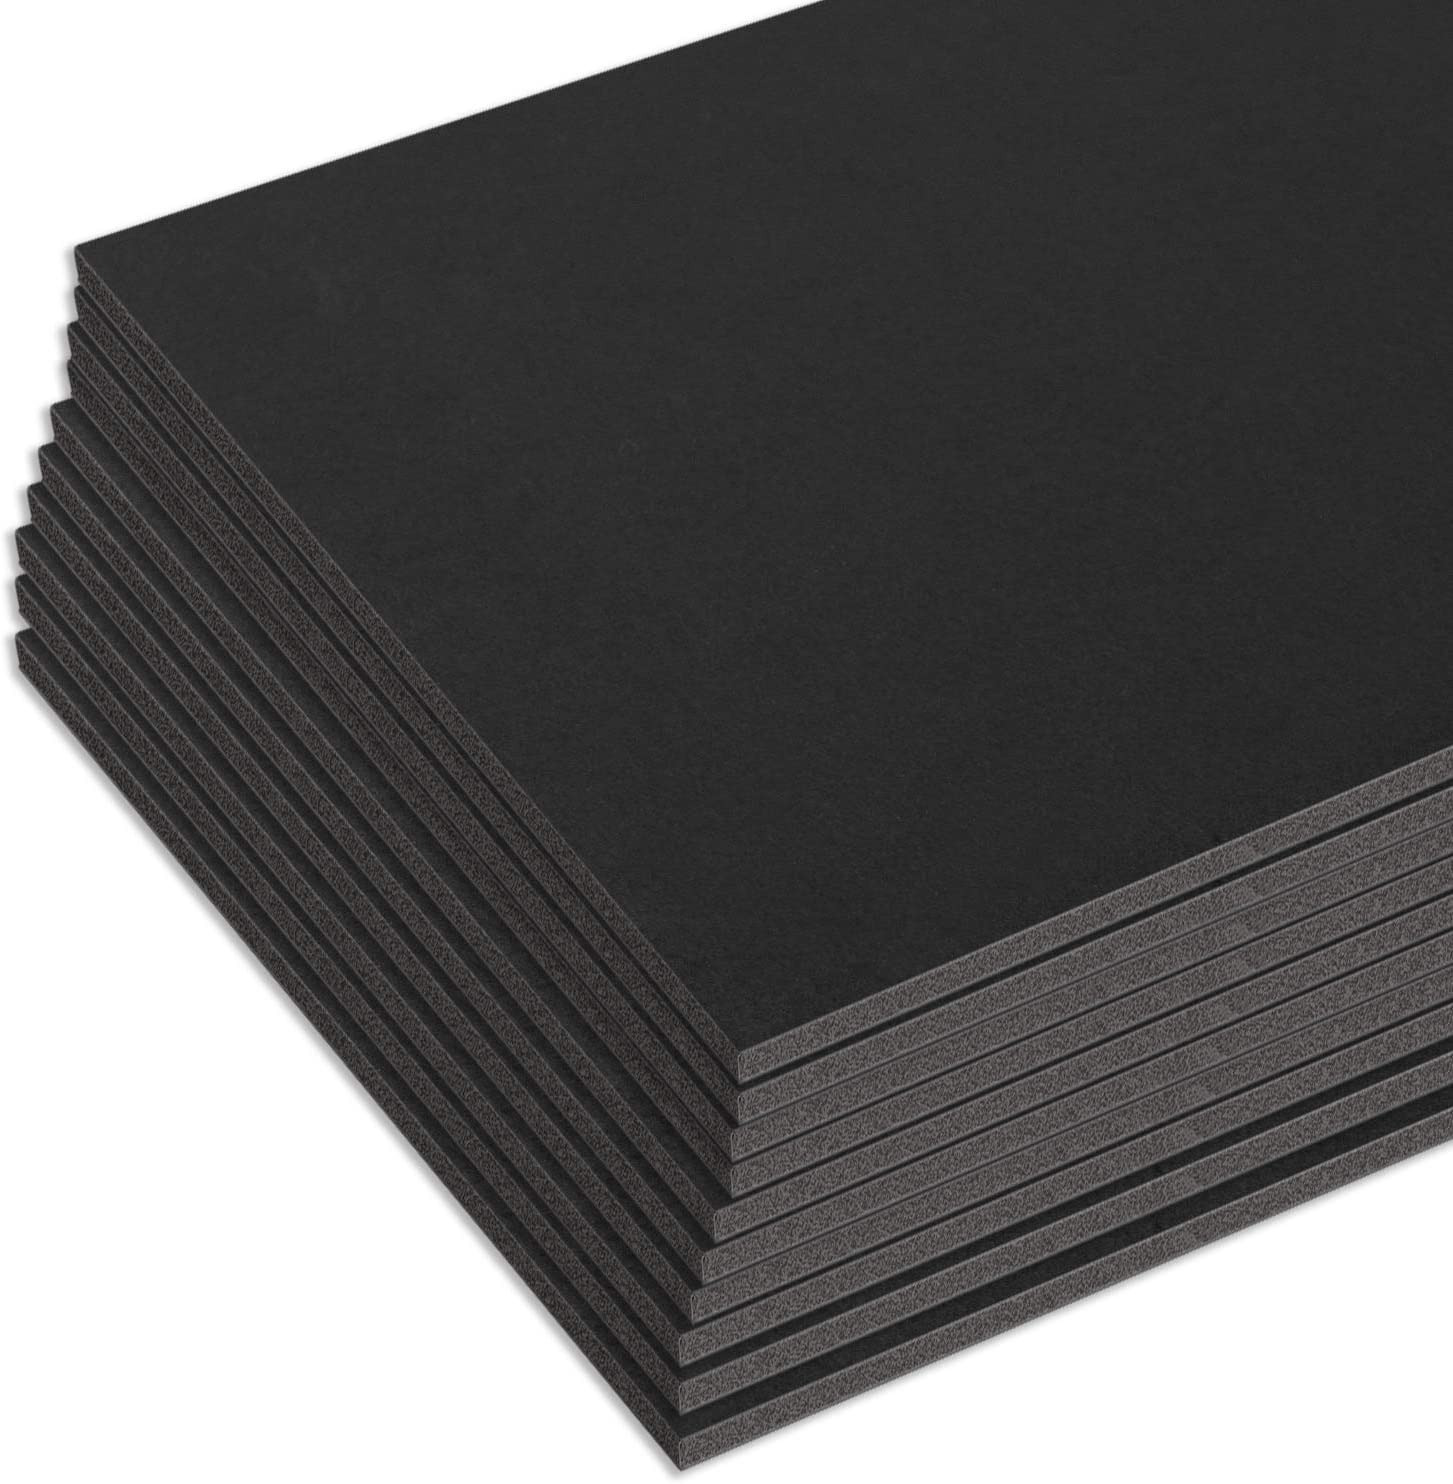 Mat Board Center, Pack Of 25 Foam Core Backing Boards 3/16" 11x14, Black